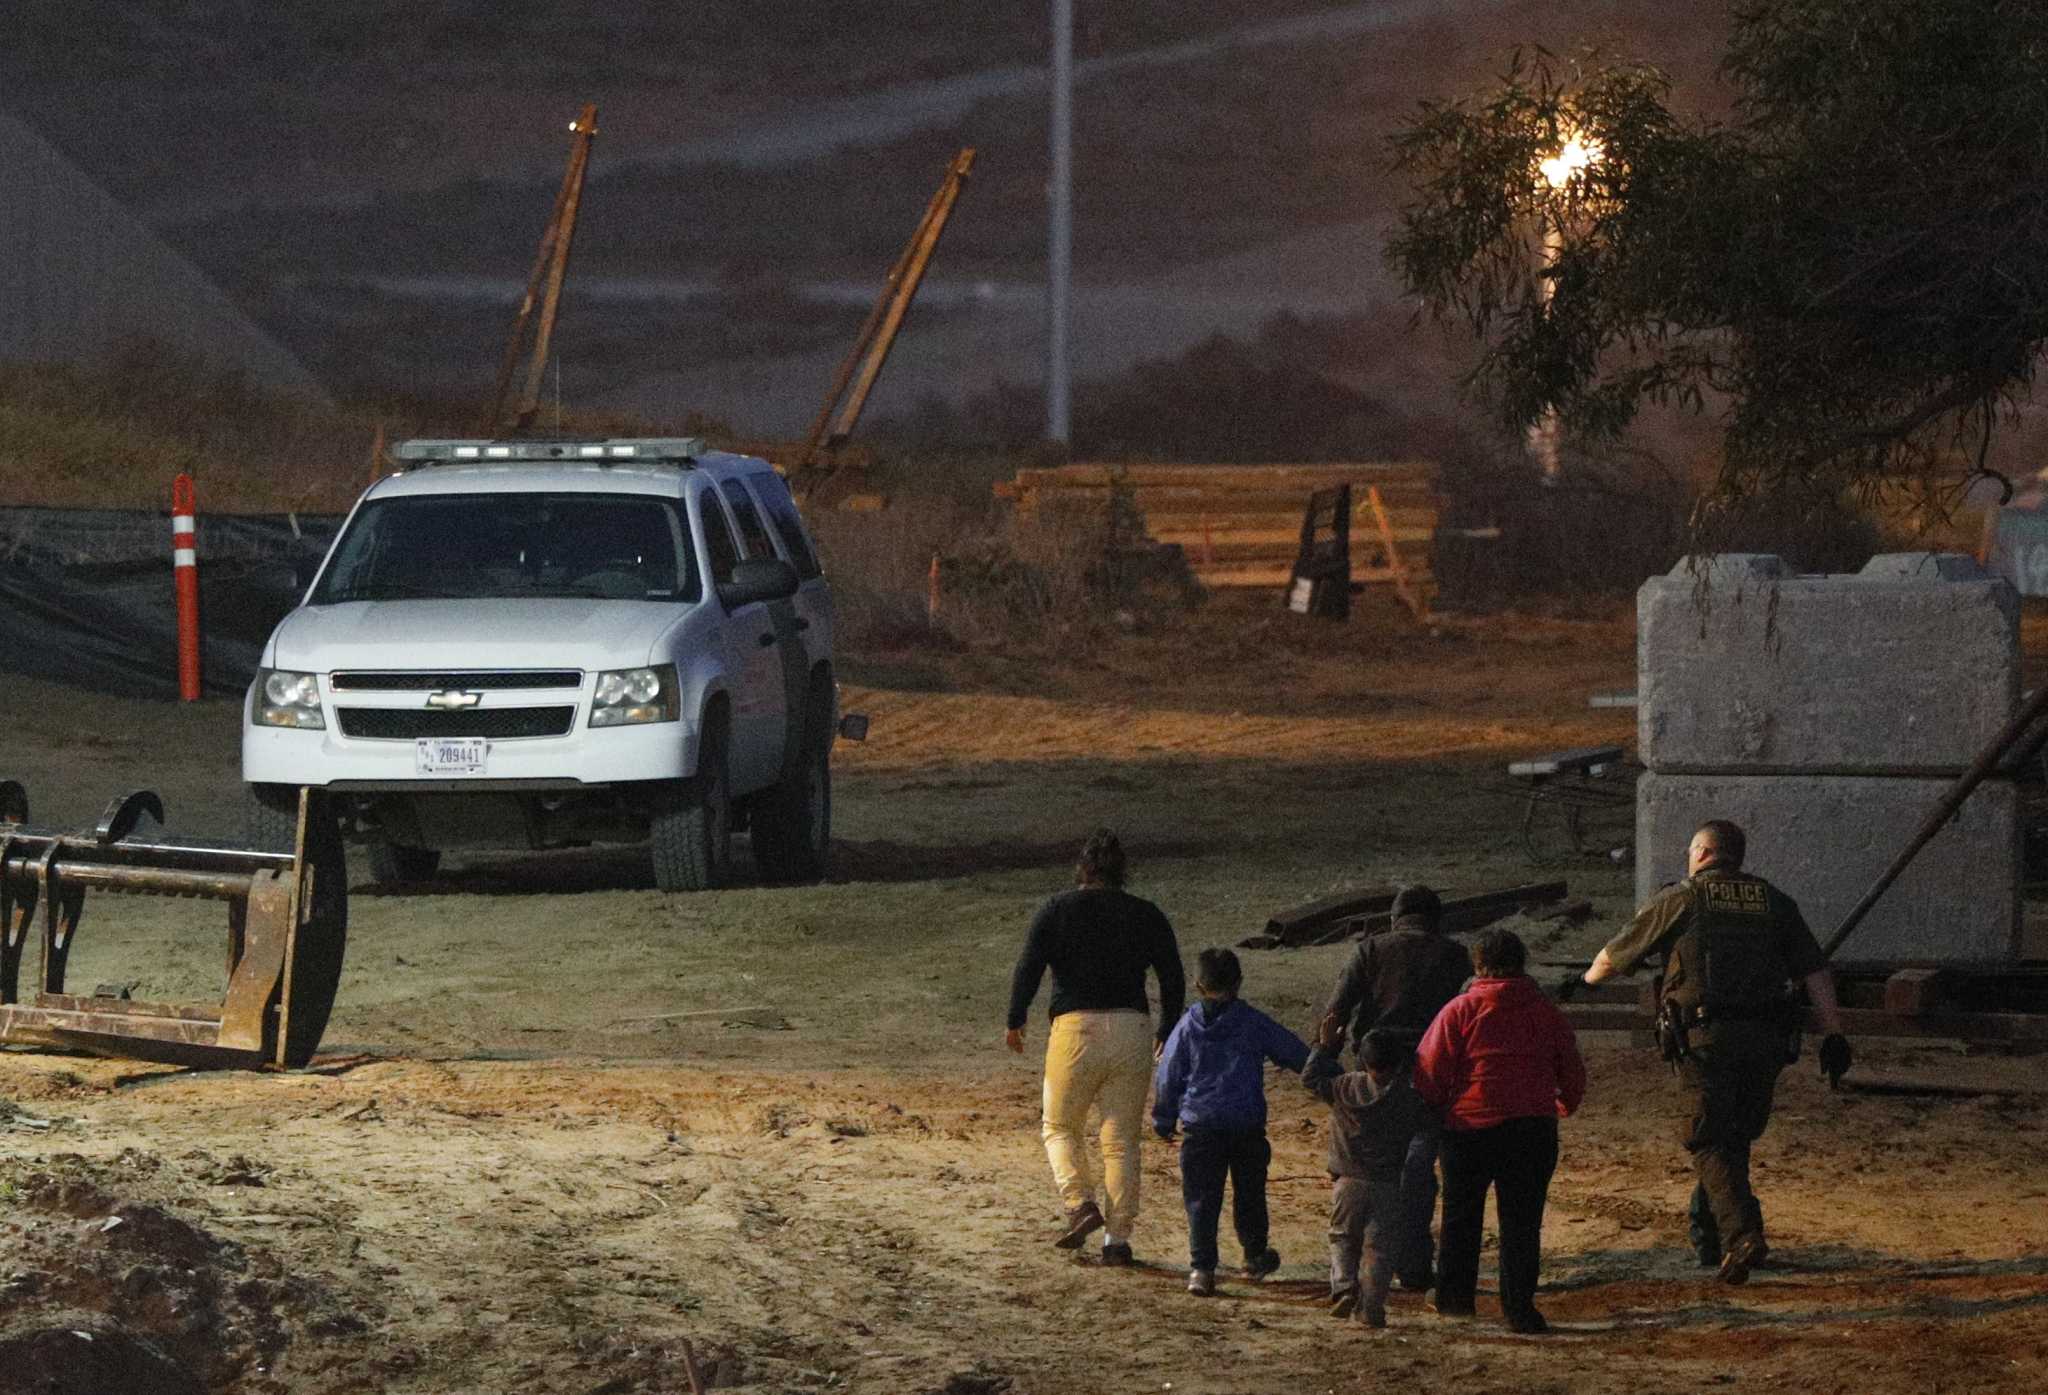 Federal judge orders U.S. to stop detaining migrant children in outdoor camps